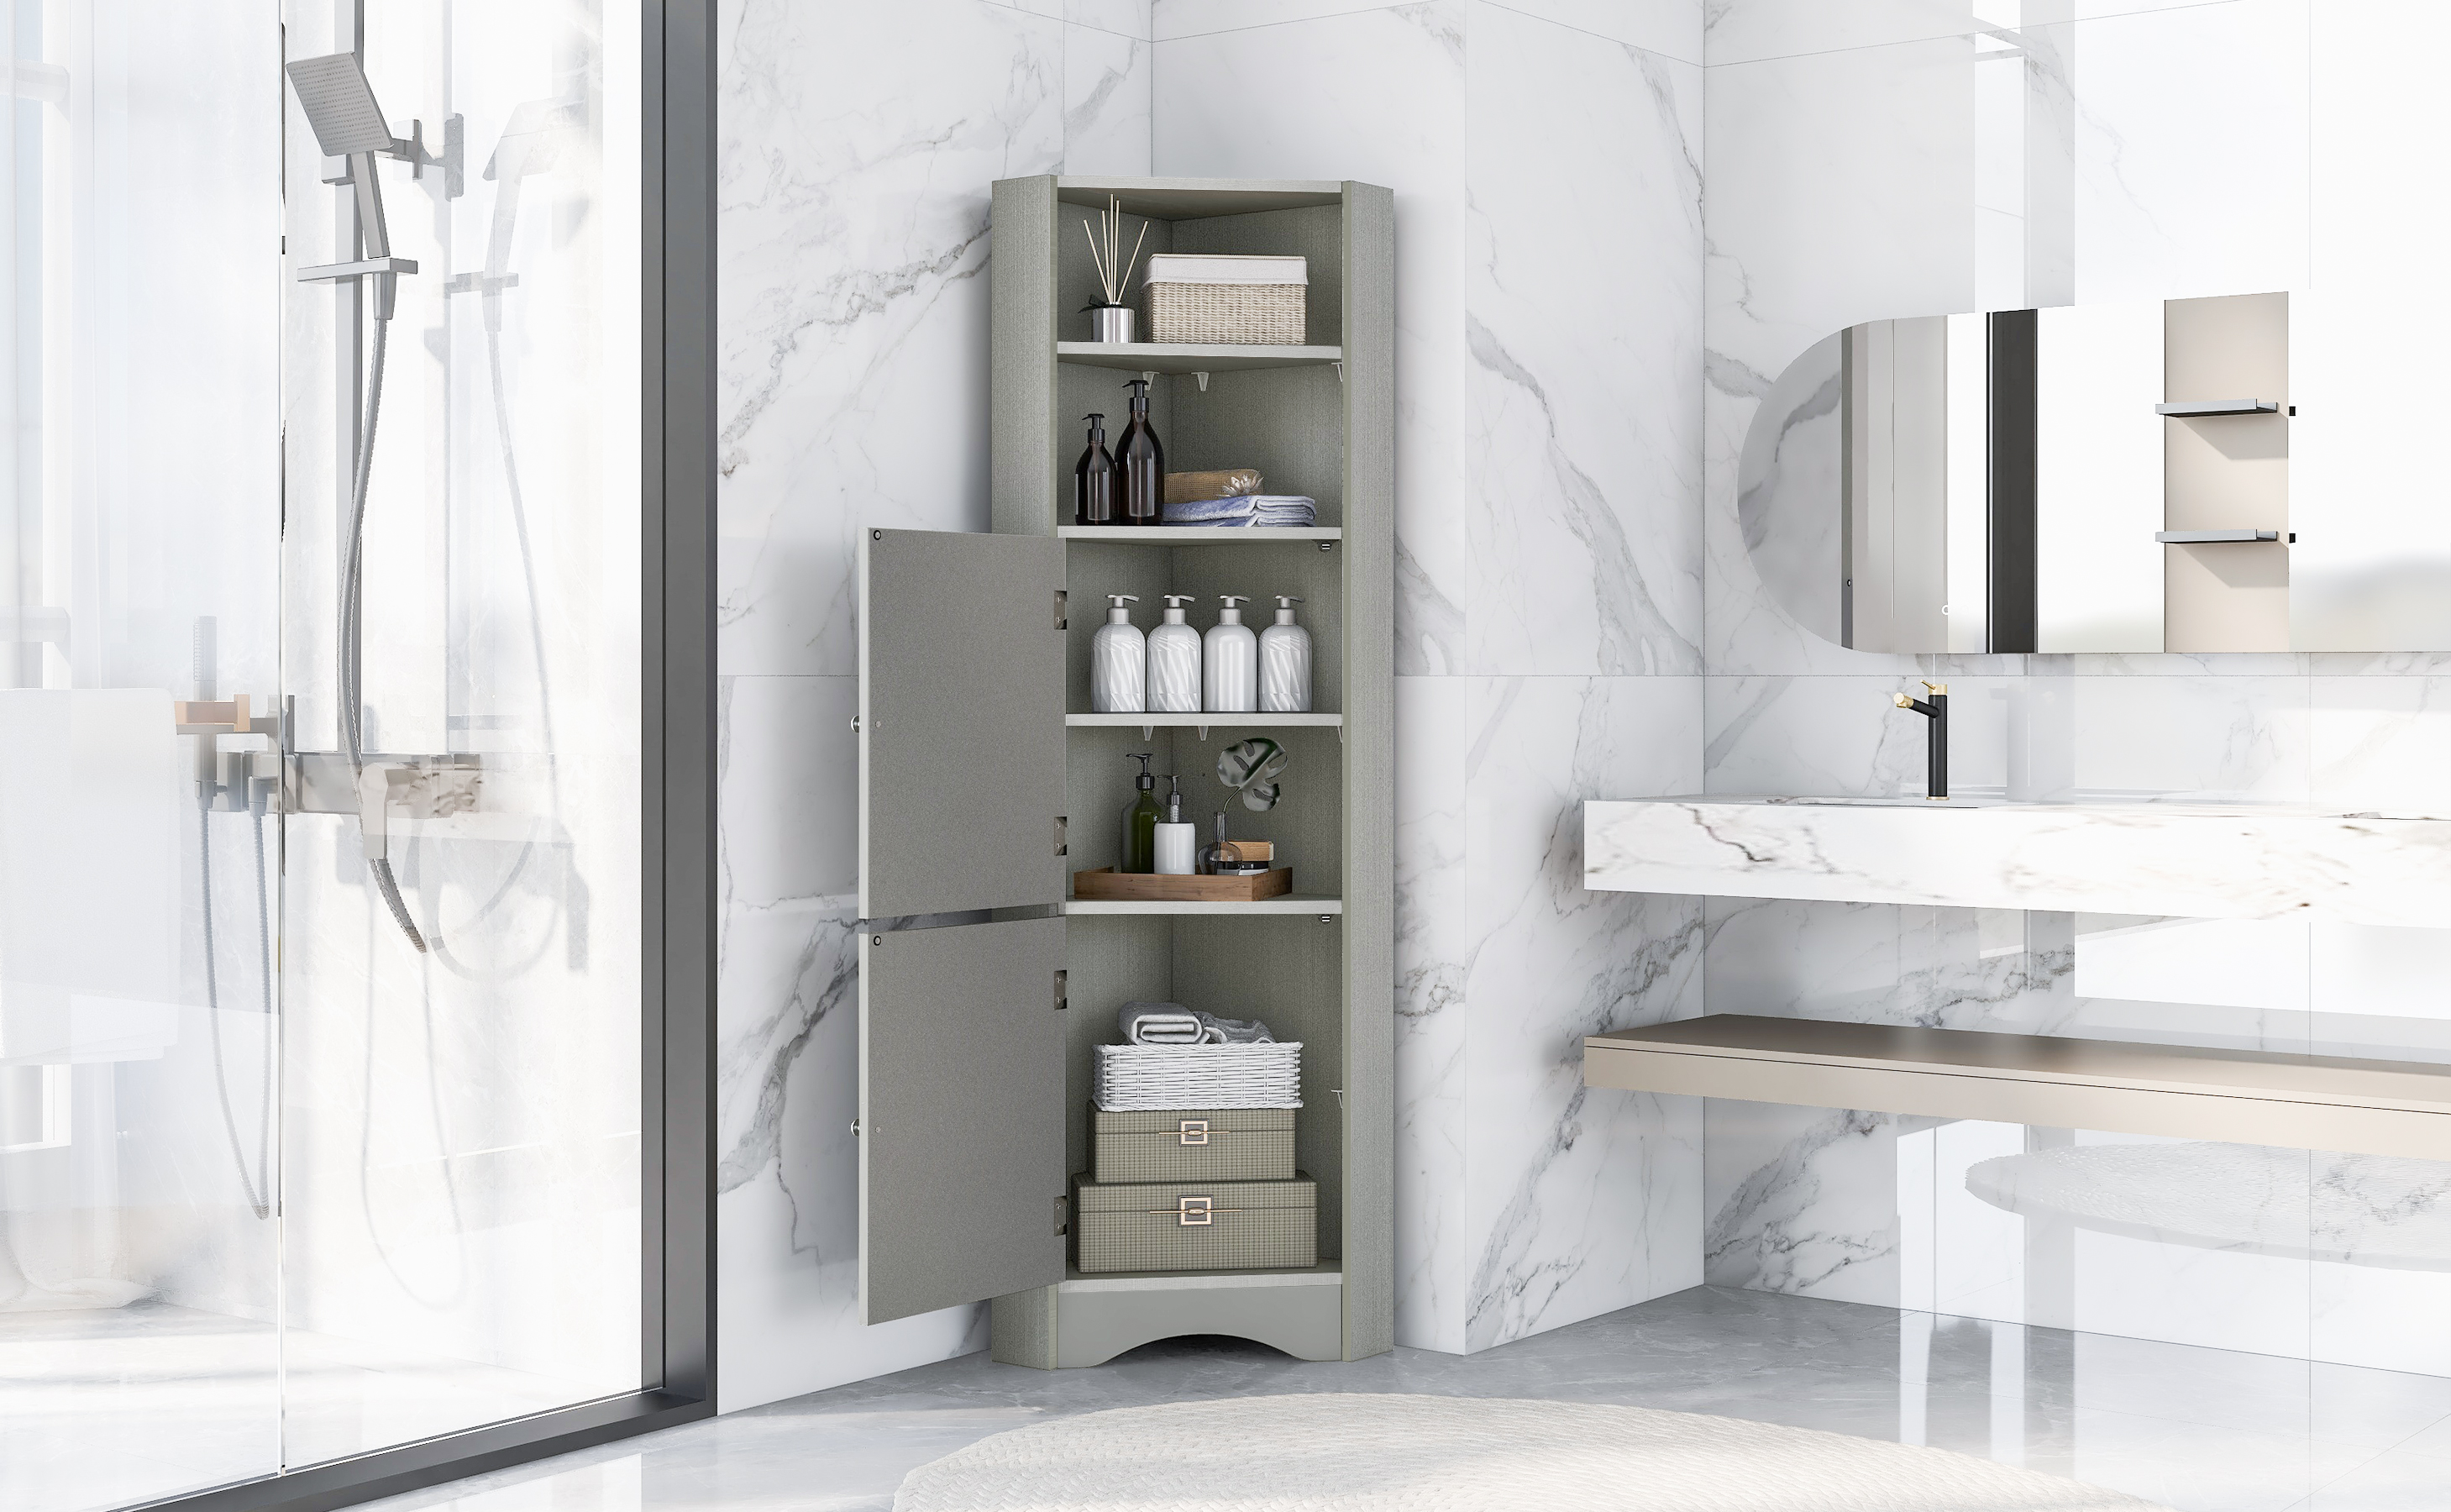 Freestanding Tall Bathroom Corner Cabinet with Doors and Adjustable Shelves